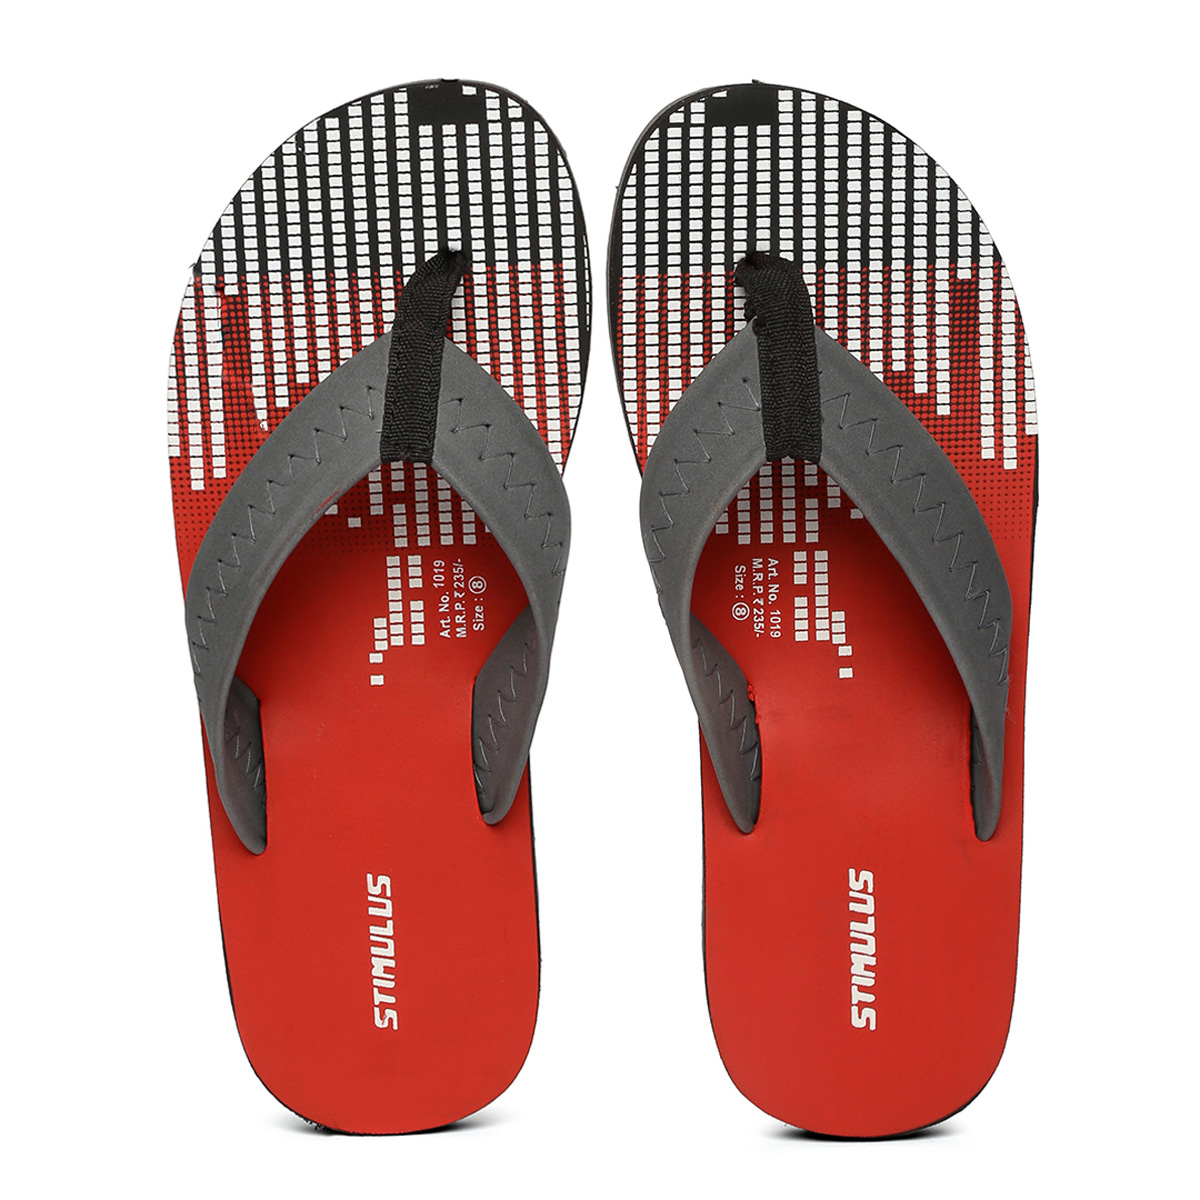 Buy Paragon-Stimulus Men's Red Flip Flops Online @ ₹235 from ShopClues